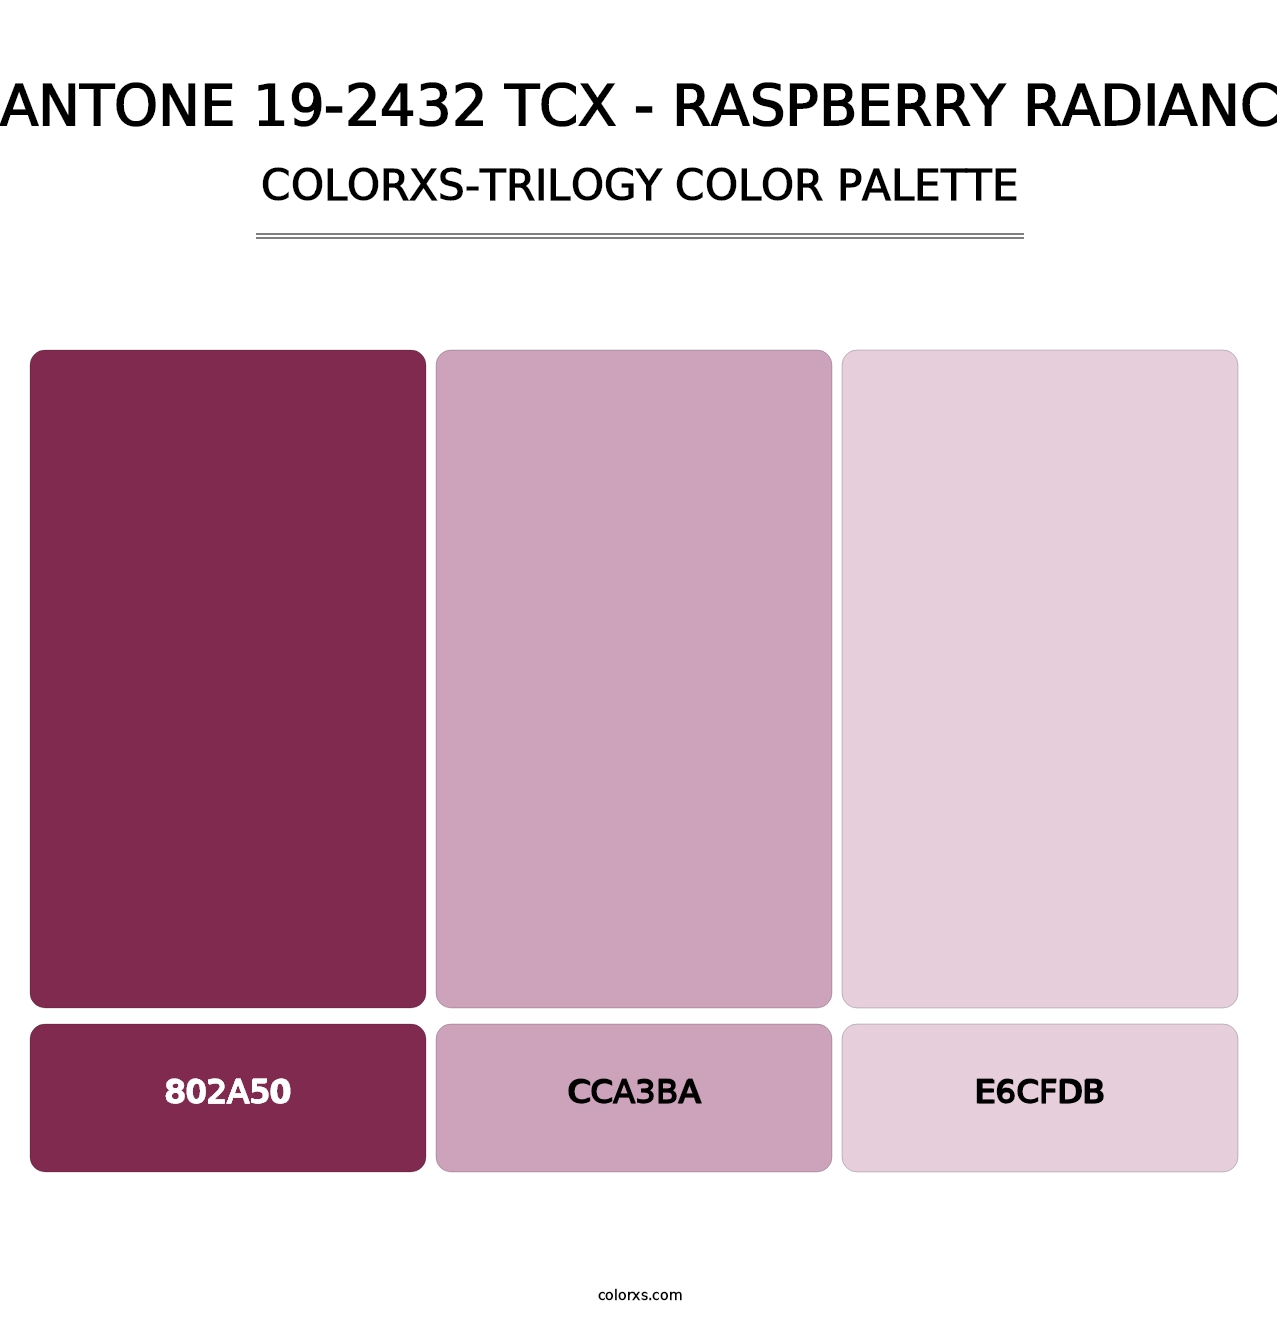 PANTONE 19-2432 TCX - Raspberry Radiance - Colorxs Trilogy Palette